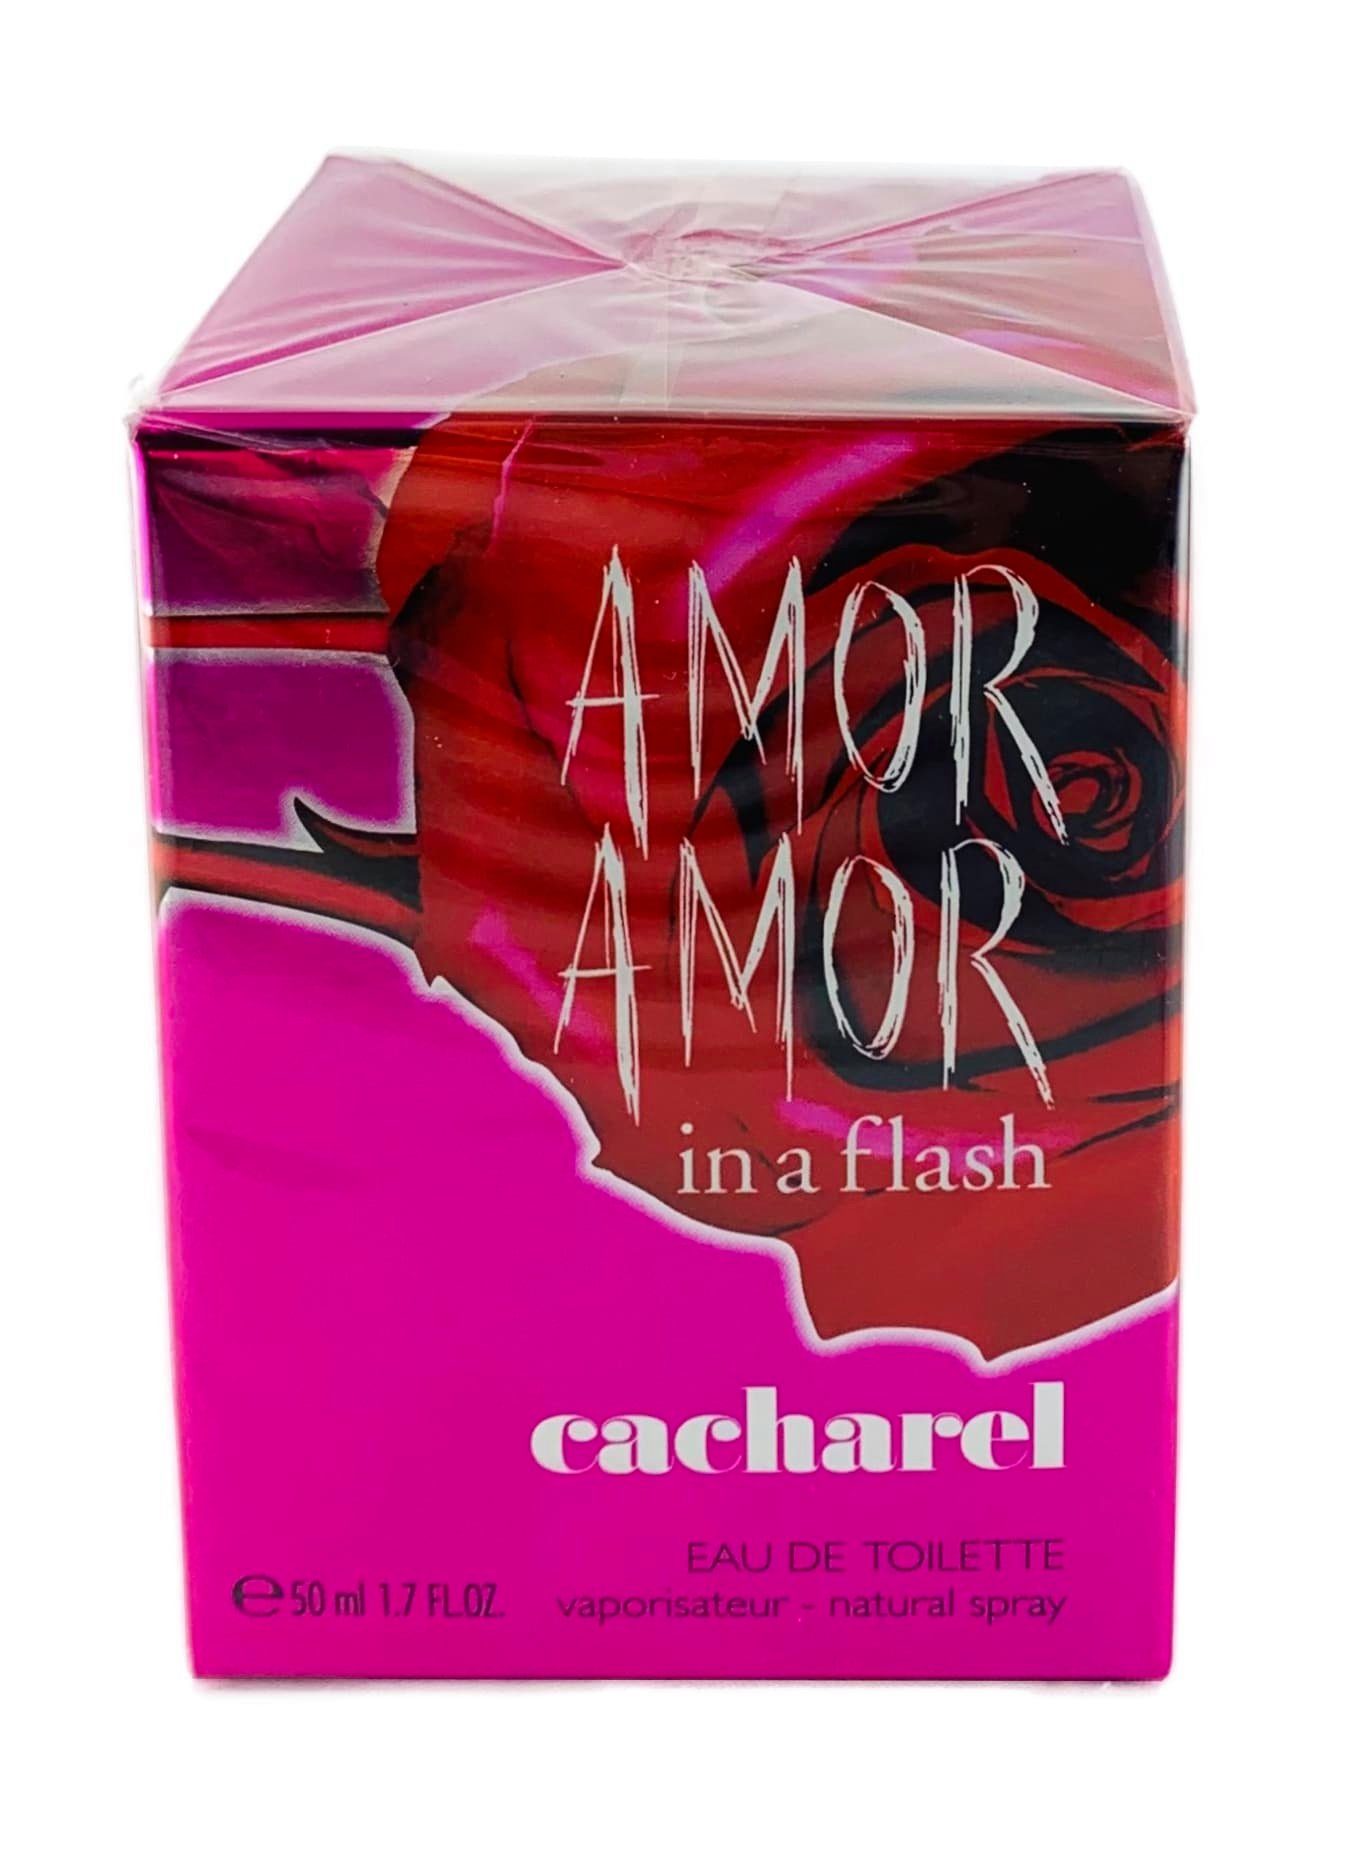 CACHAREL Eau de Toilette ml Flash" Spray 50 Cacharel a "Amor Edt in